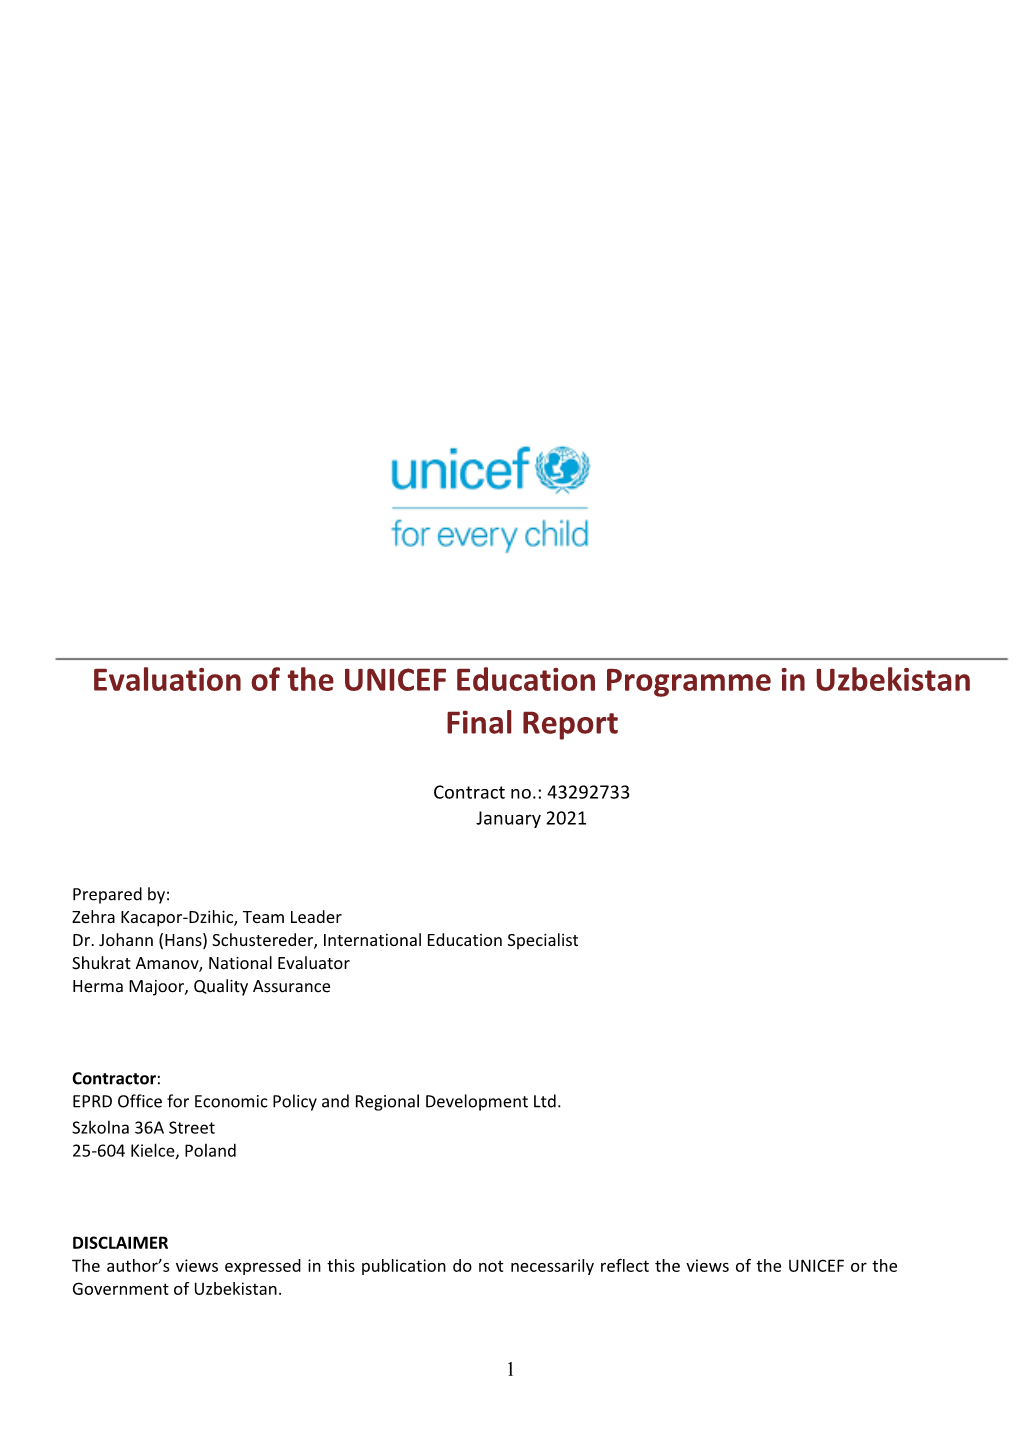 Evaluation of the UNICEF Education Programme in Uzbekistan Final Report